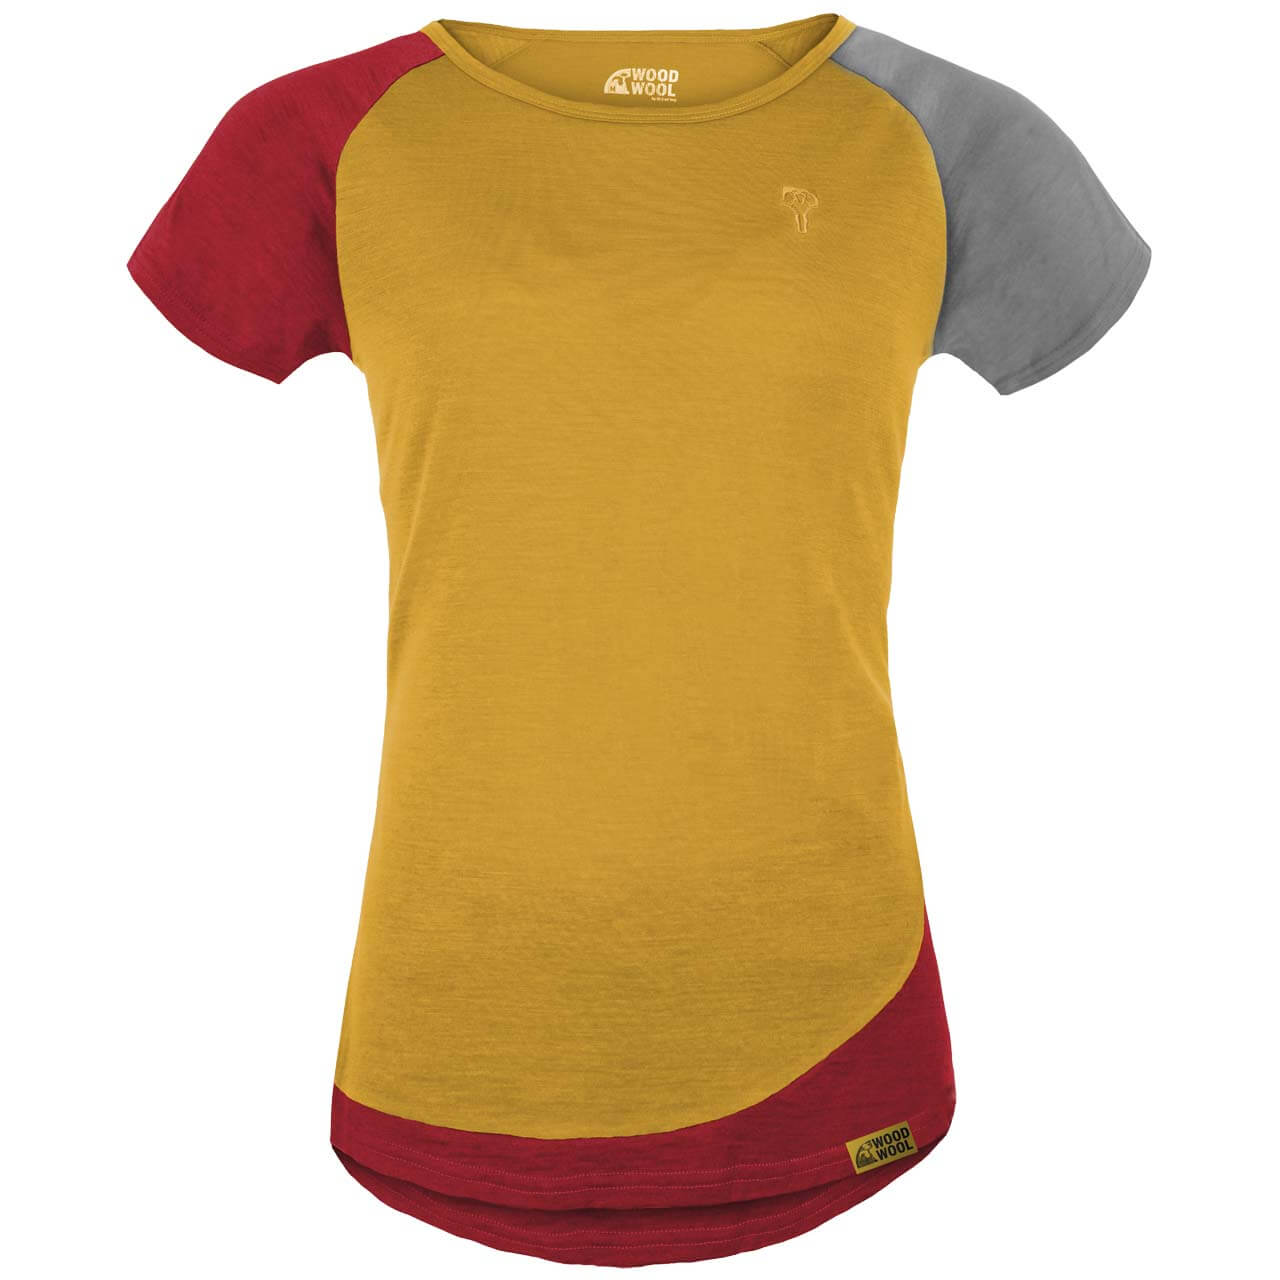 Grüezi Bag WoodWool Janeway T-Shirt - Daisy Daze Yellow, XS von Grüezi Bag}